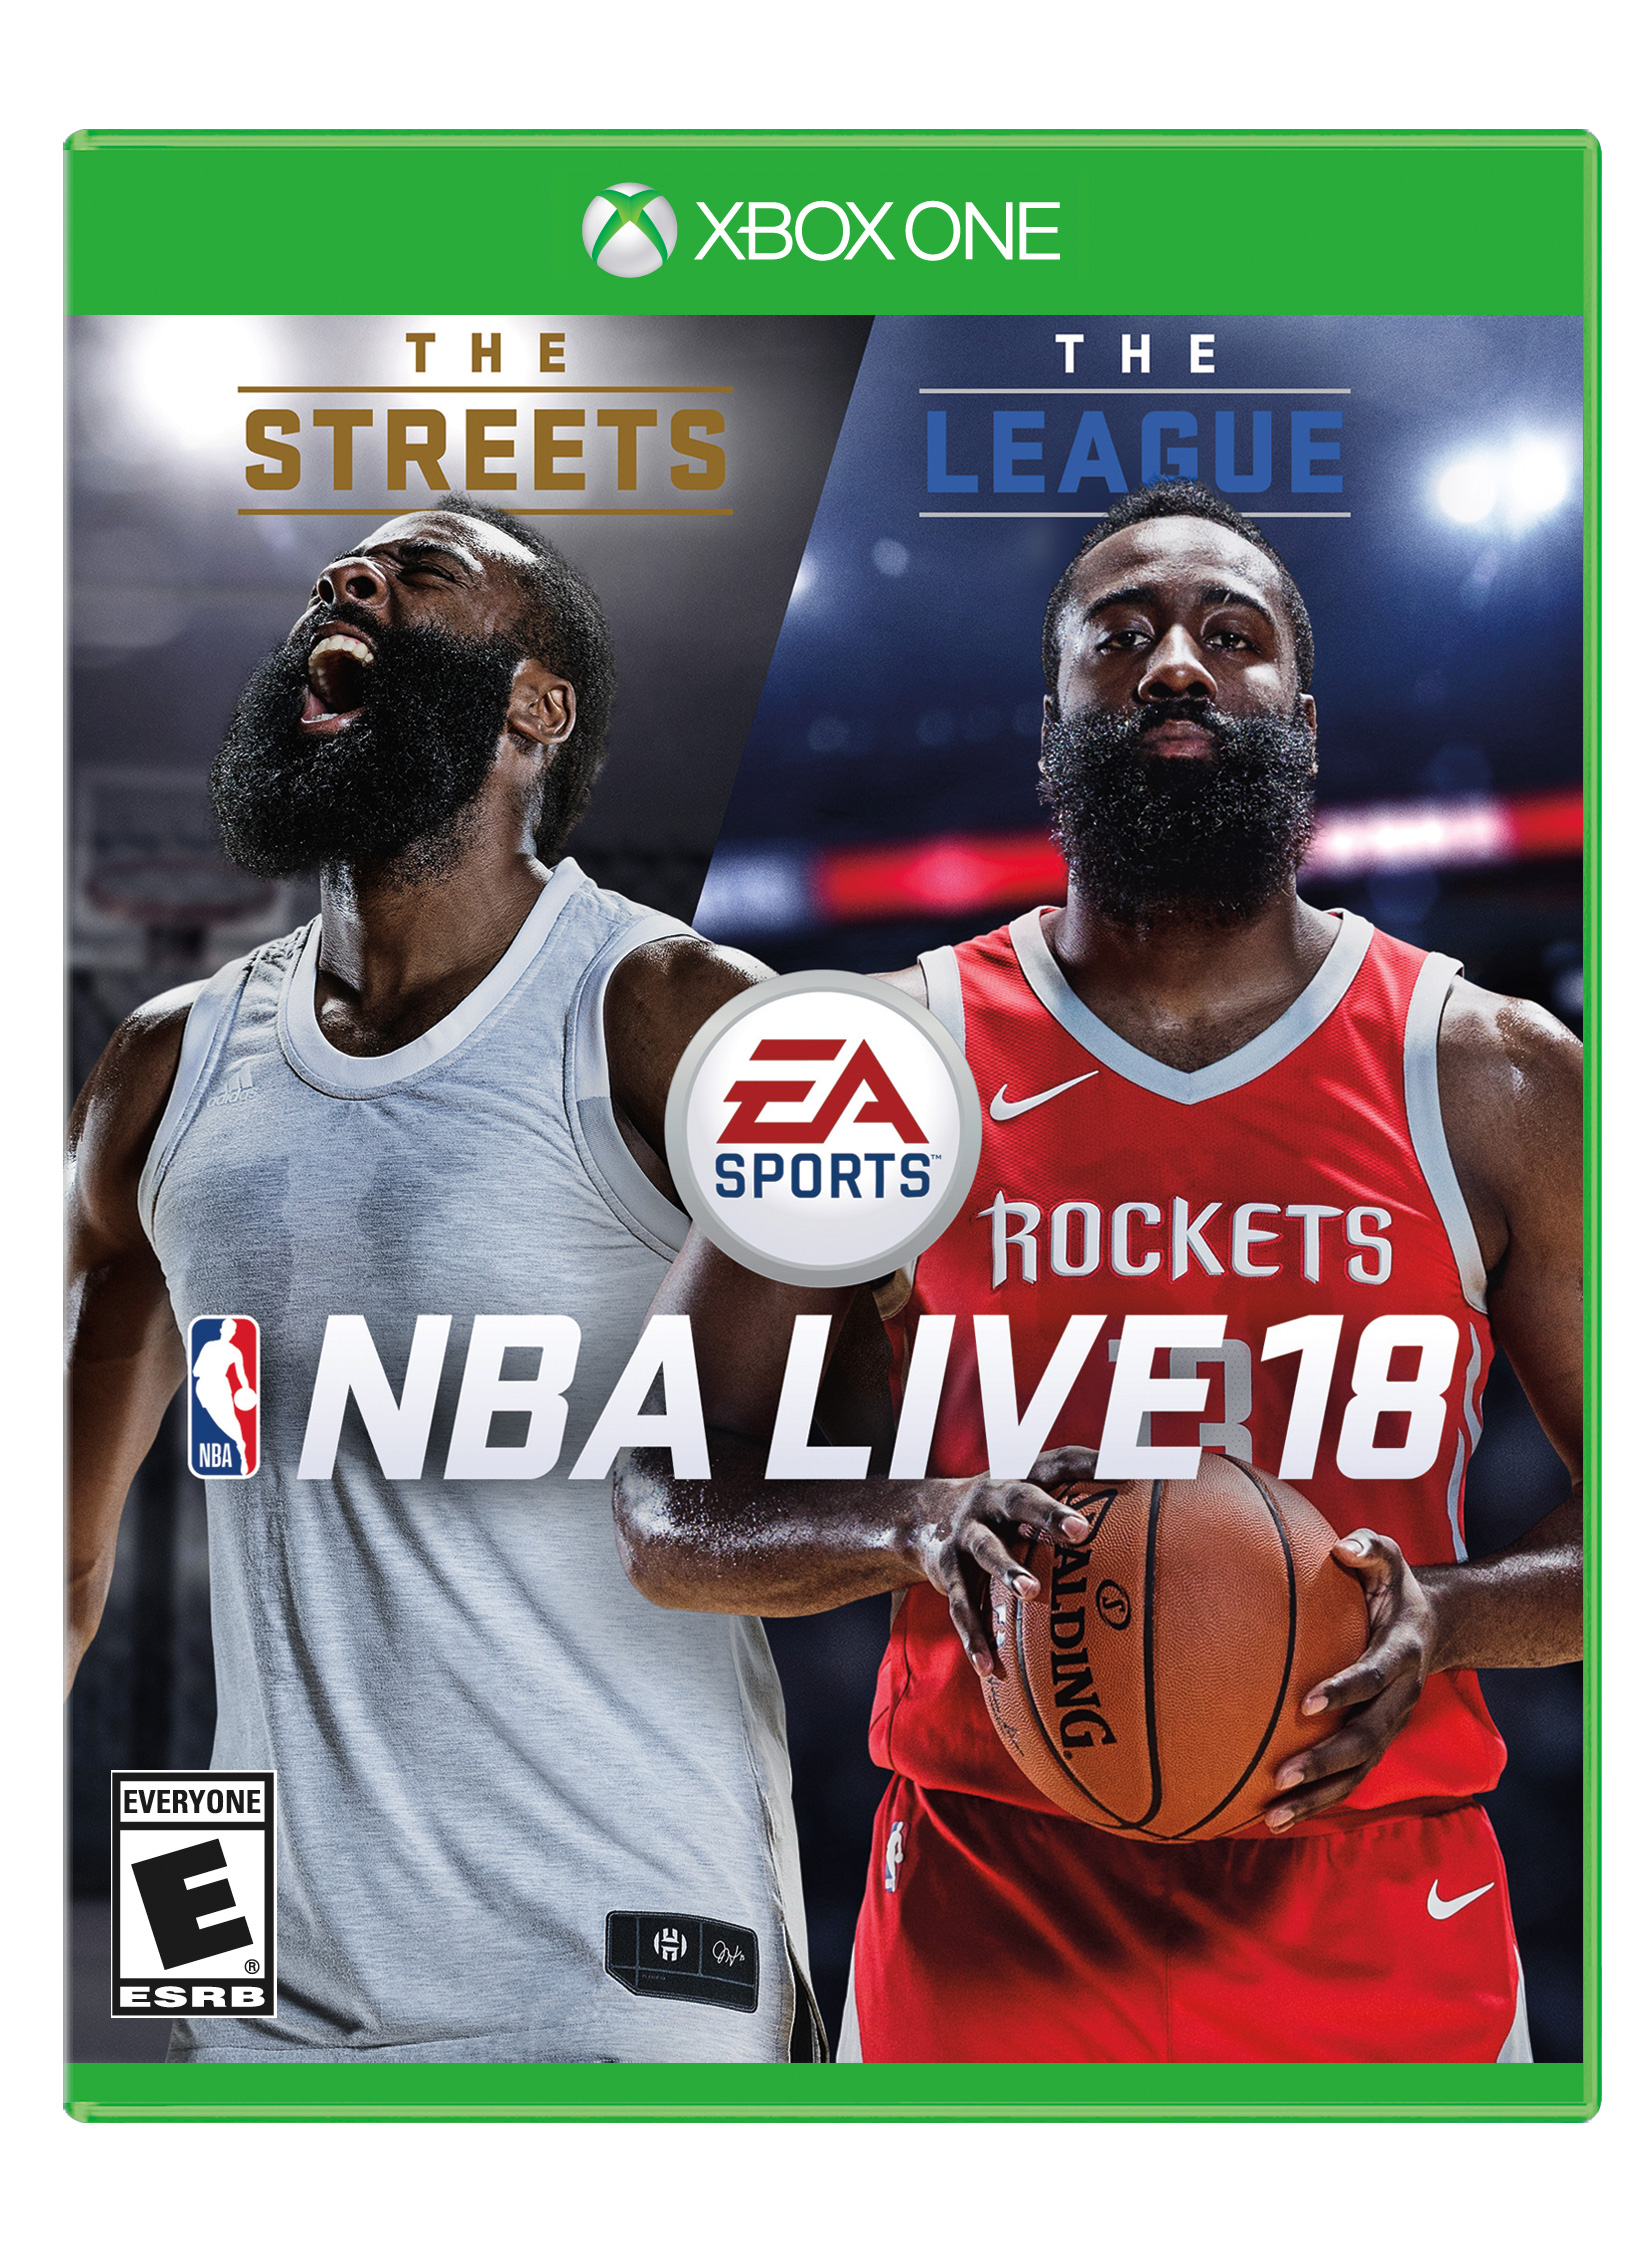 NBA Live 18 Cover Art